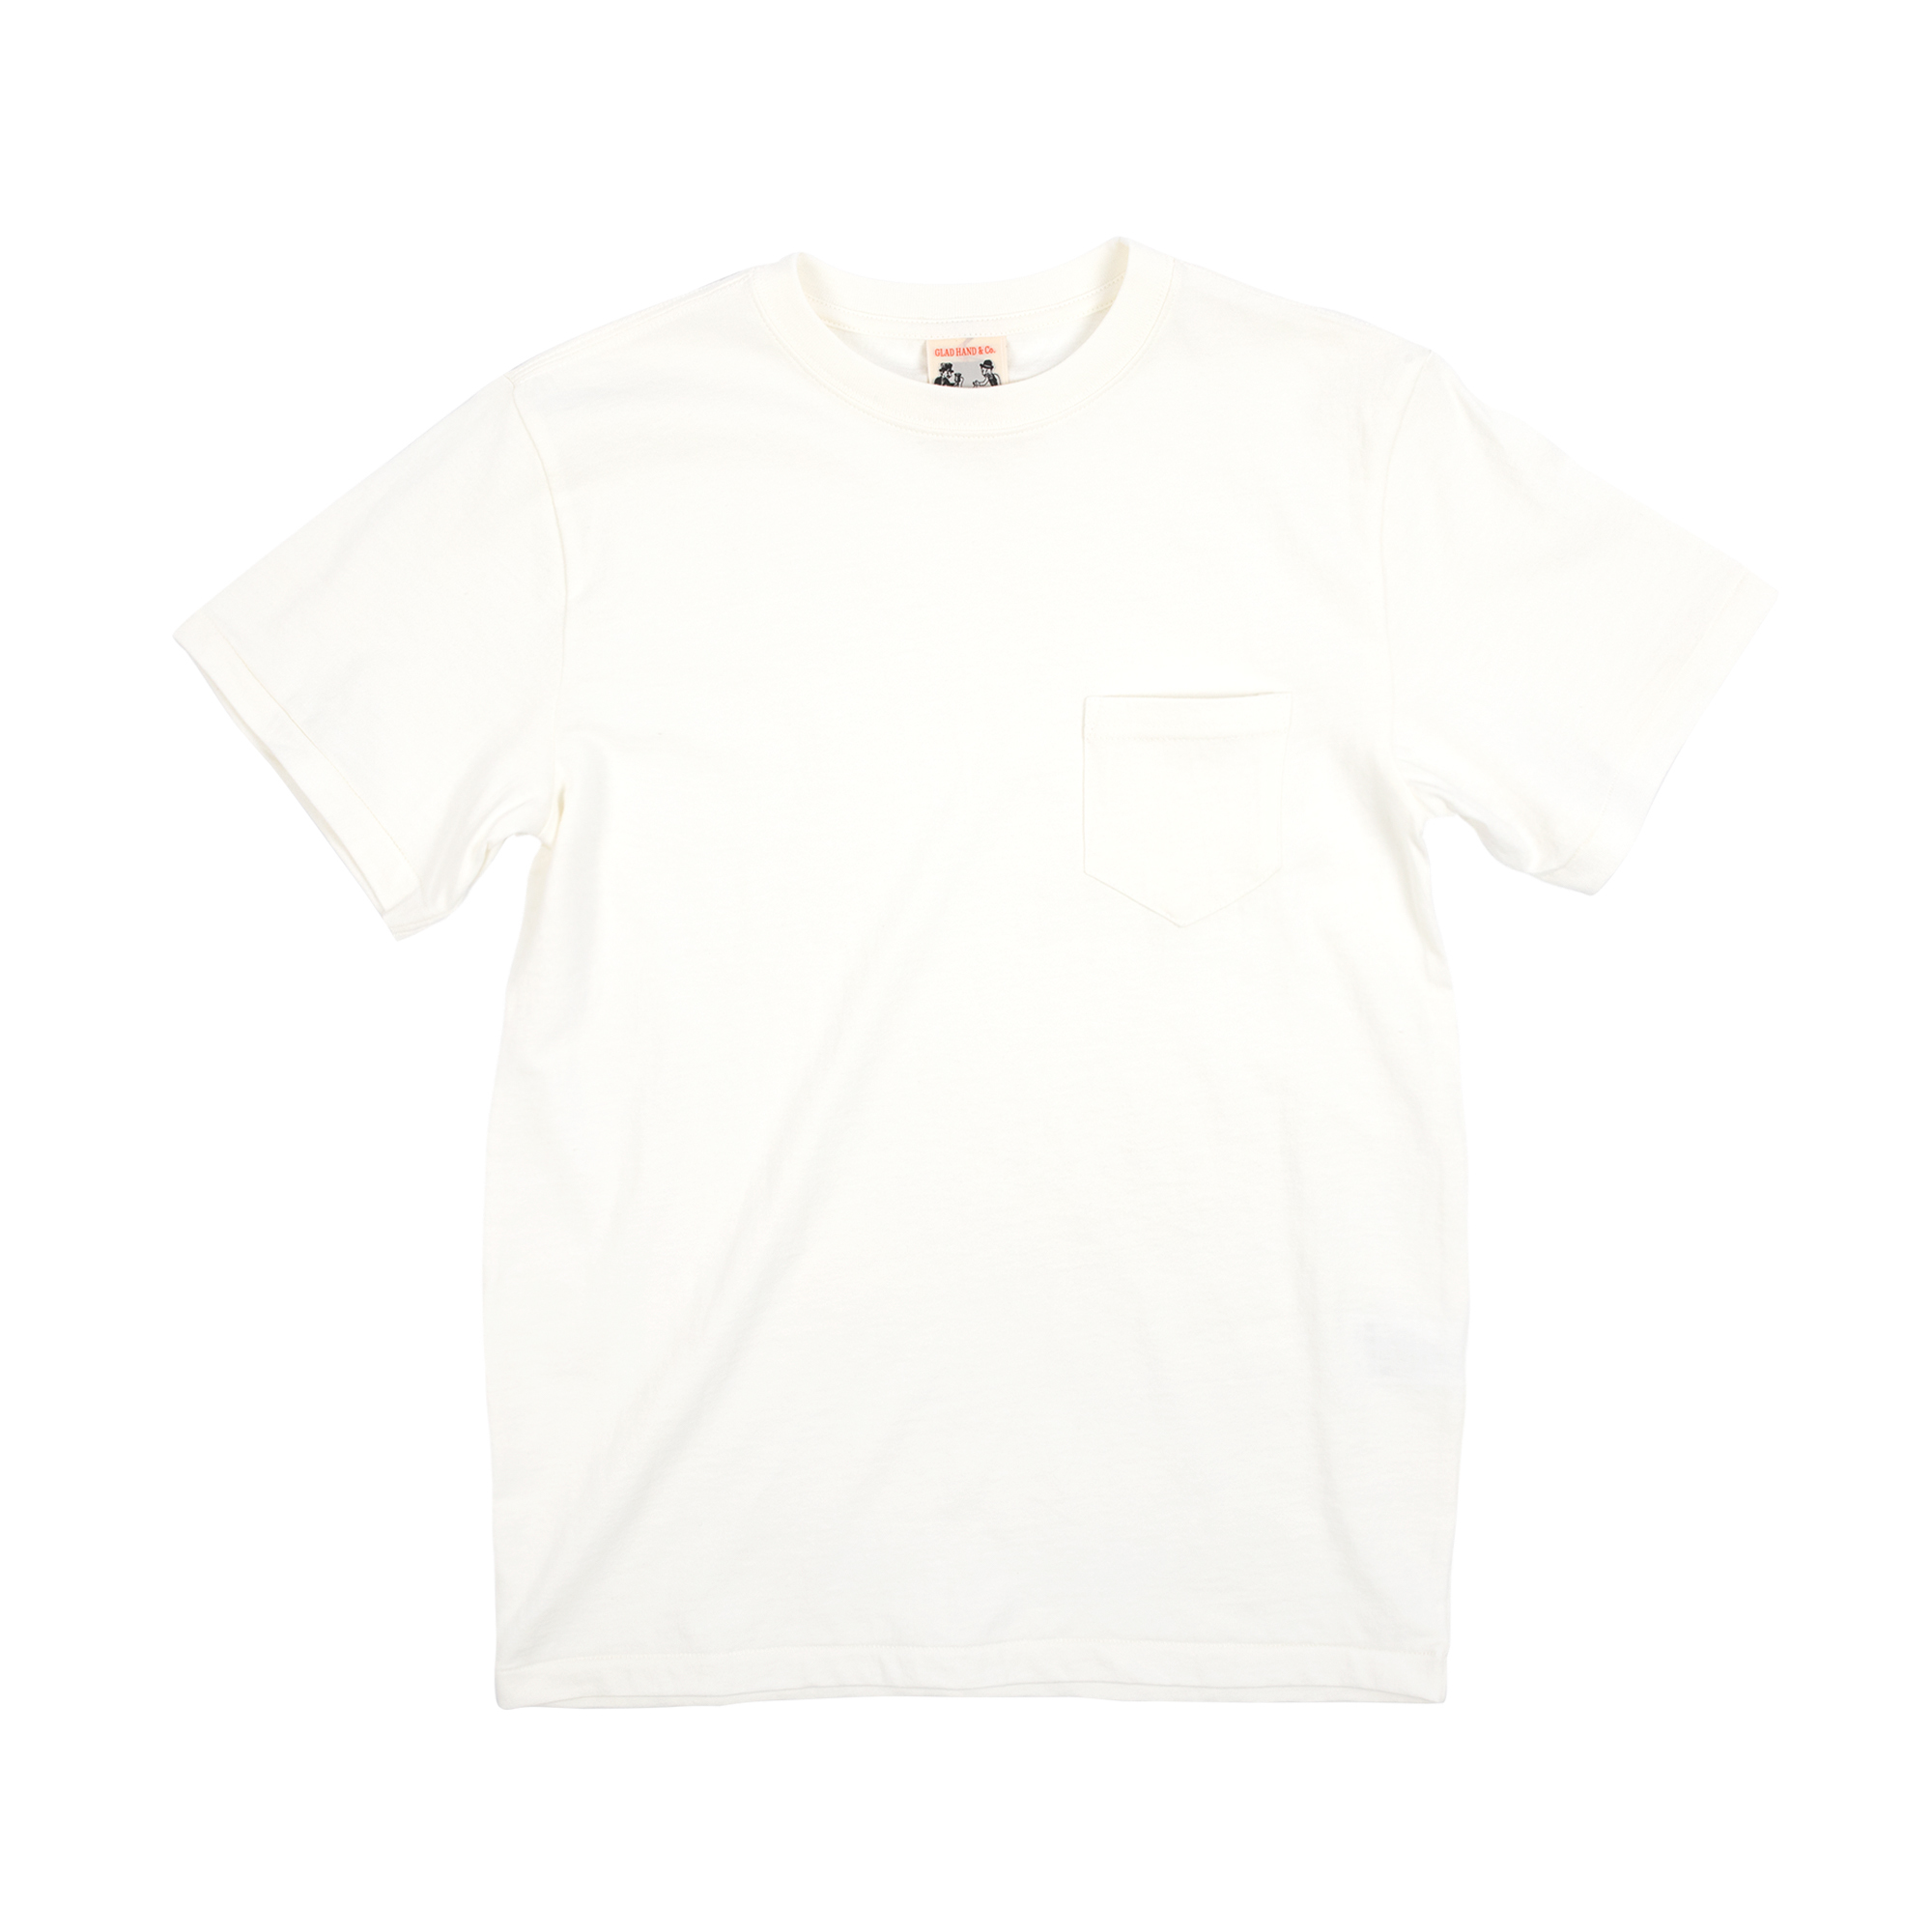 Glad Hand & Co. - 20 / Standard Pocket T-Shirts (White)